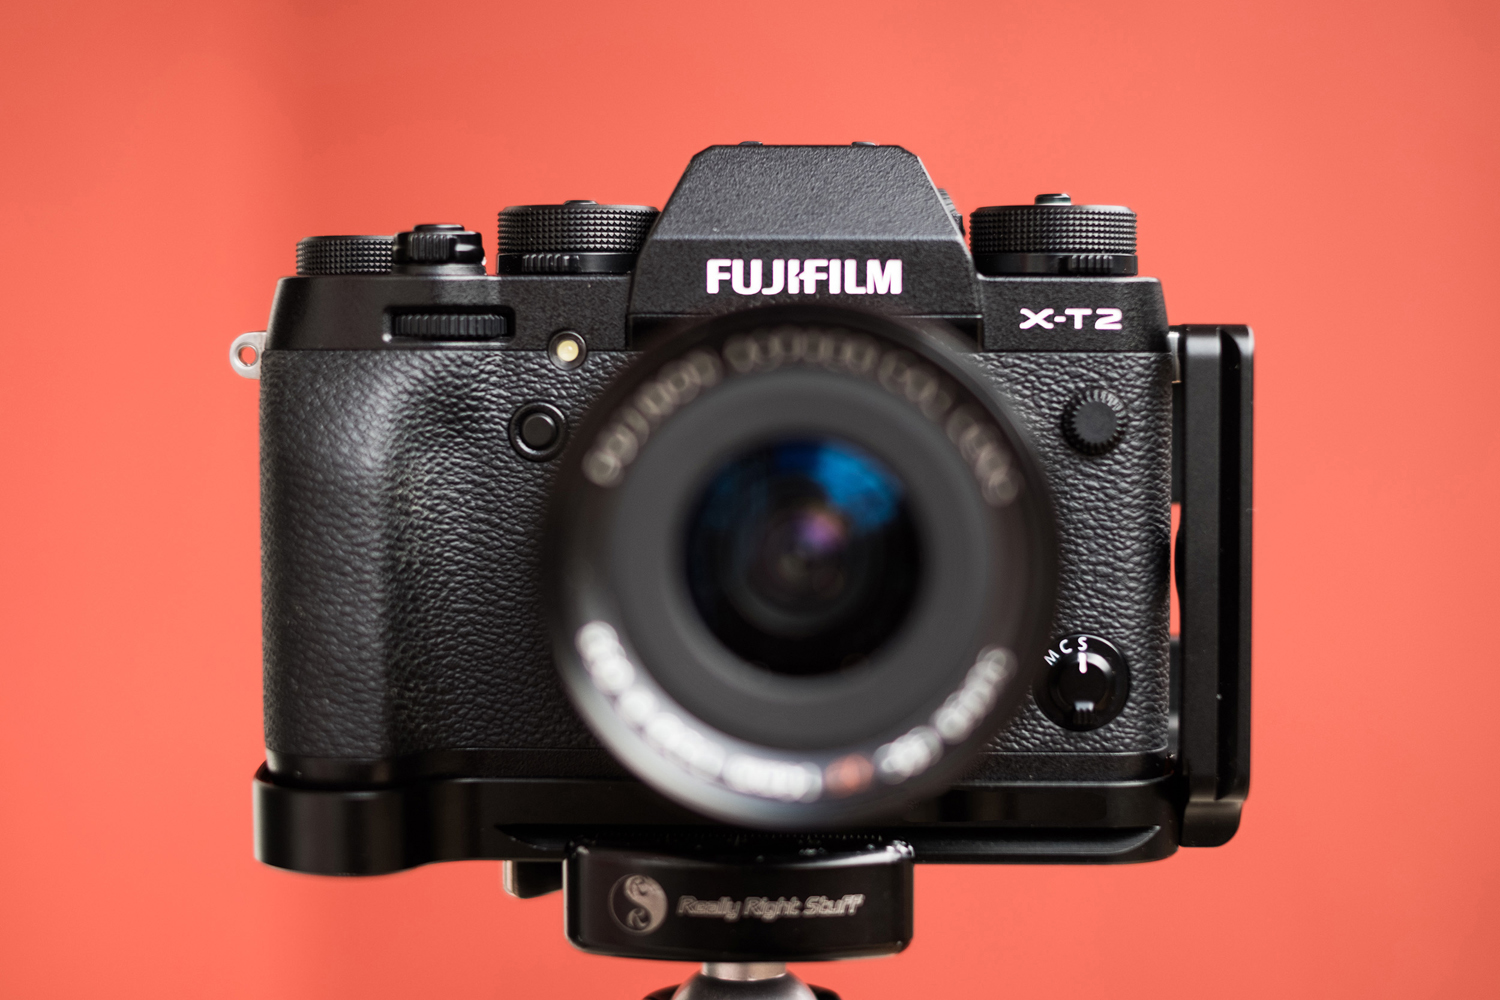 Fujifilm X-T2 Overview